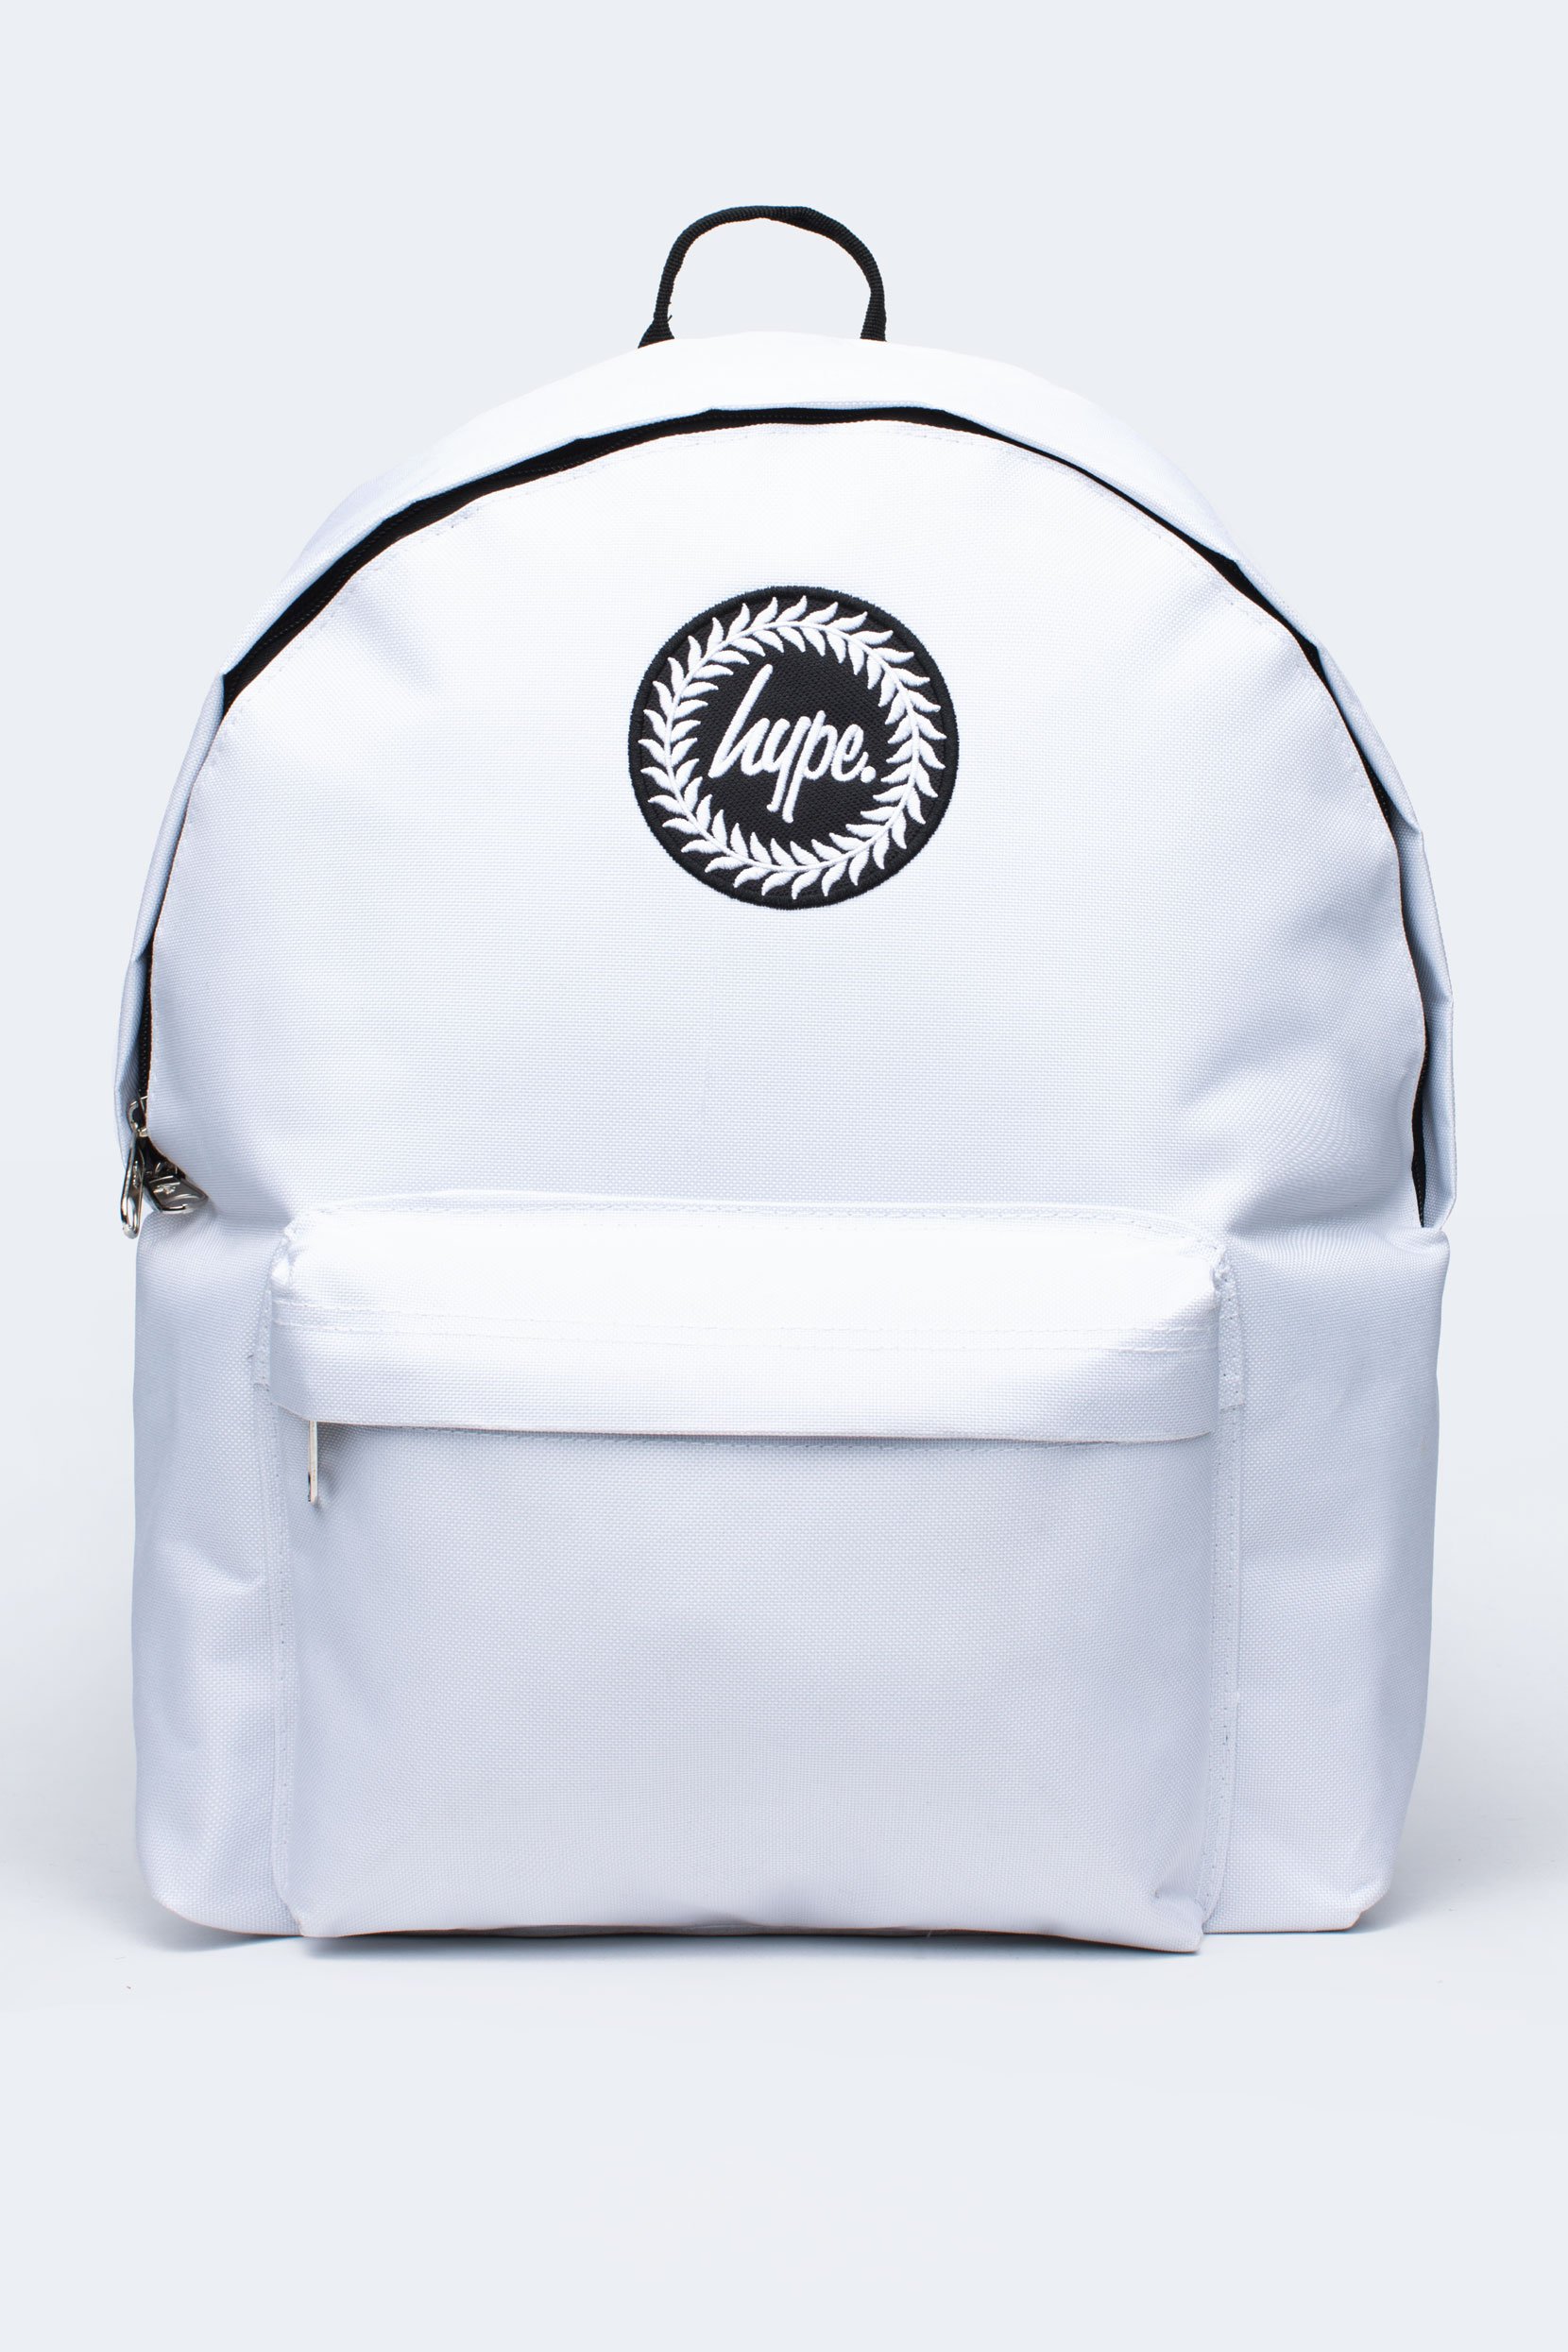 Hype White Badge Backpack School Bag